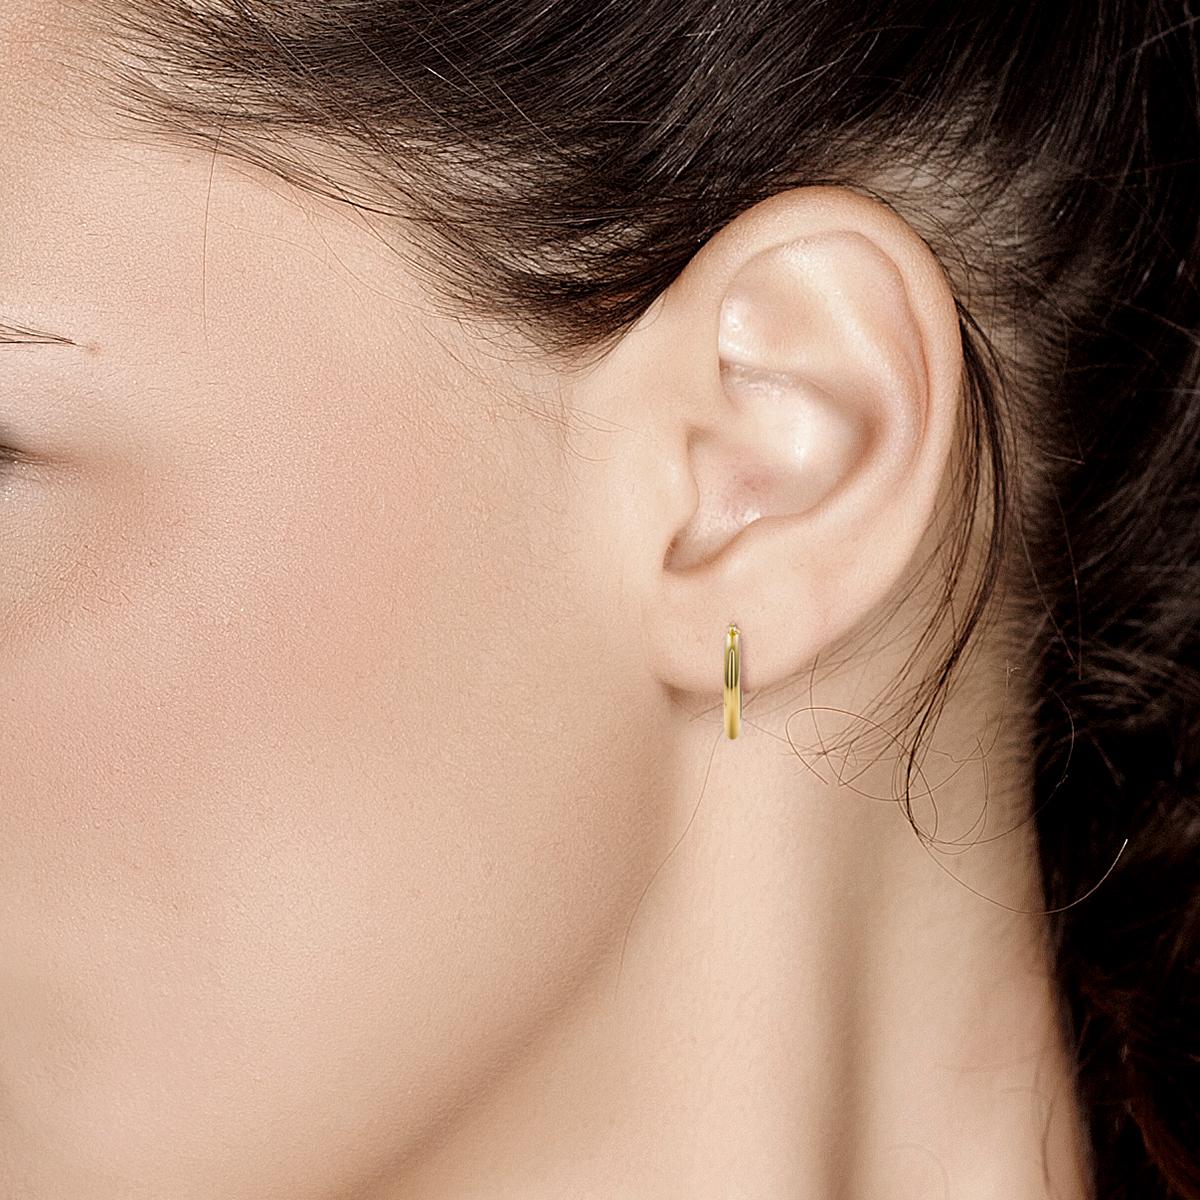 14 karat yellow gold mini hoop earrings

Earrings measuring 0.60